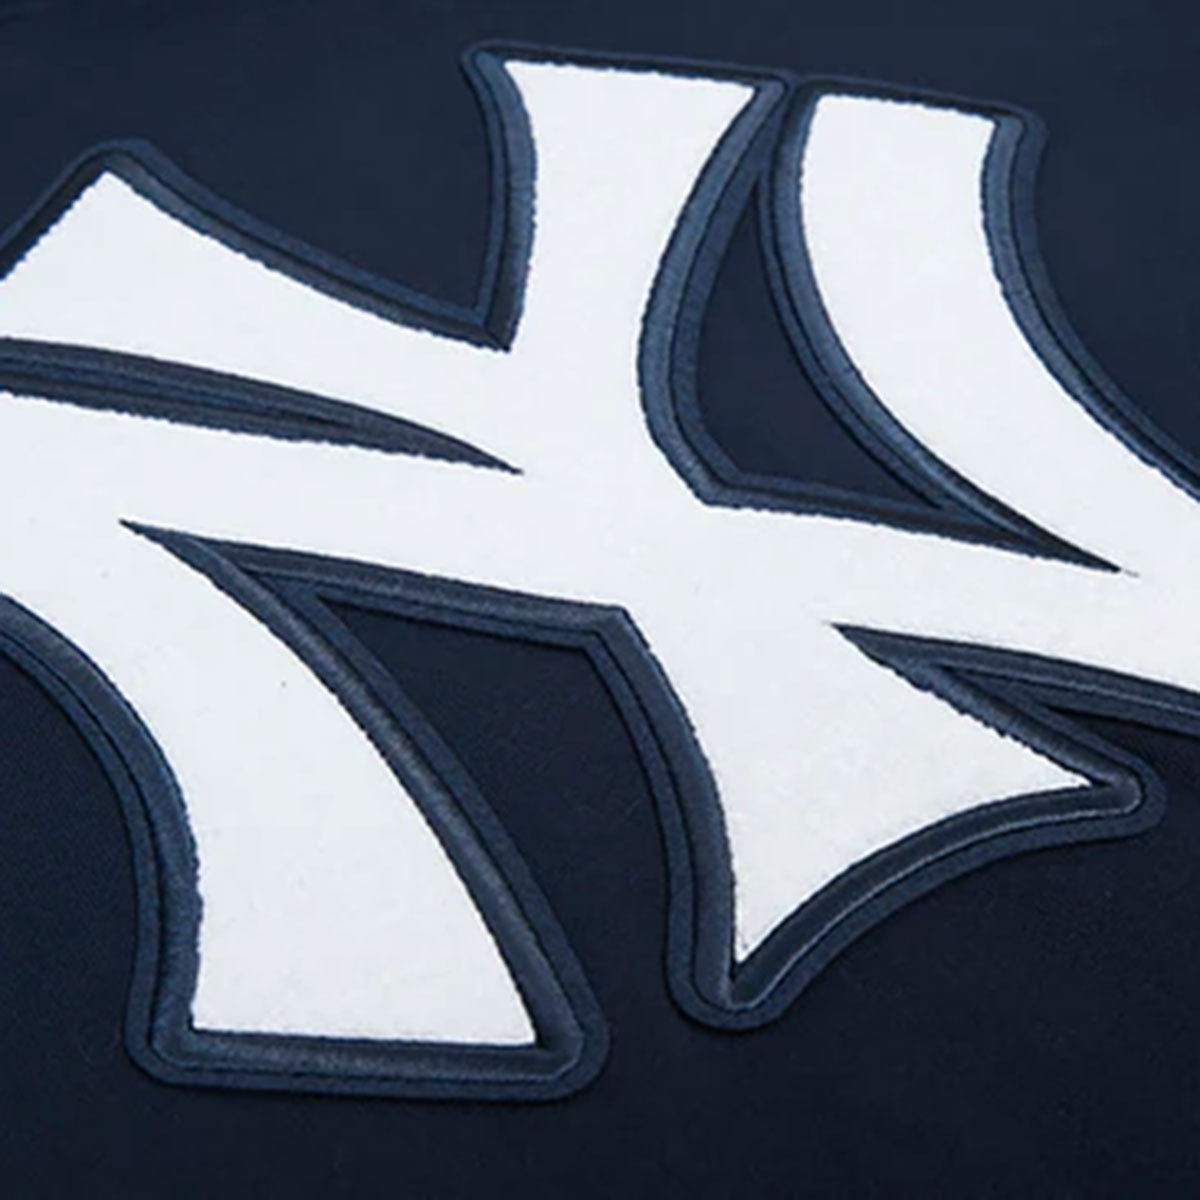 PRO STANDARD - New York Yankees RETRO CLASSIC FLC PO HOODIE【LNY535126】